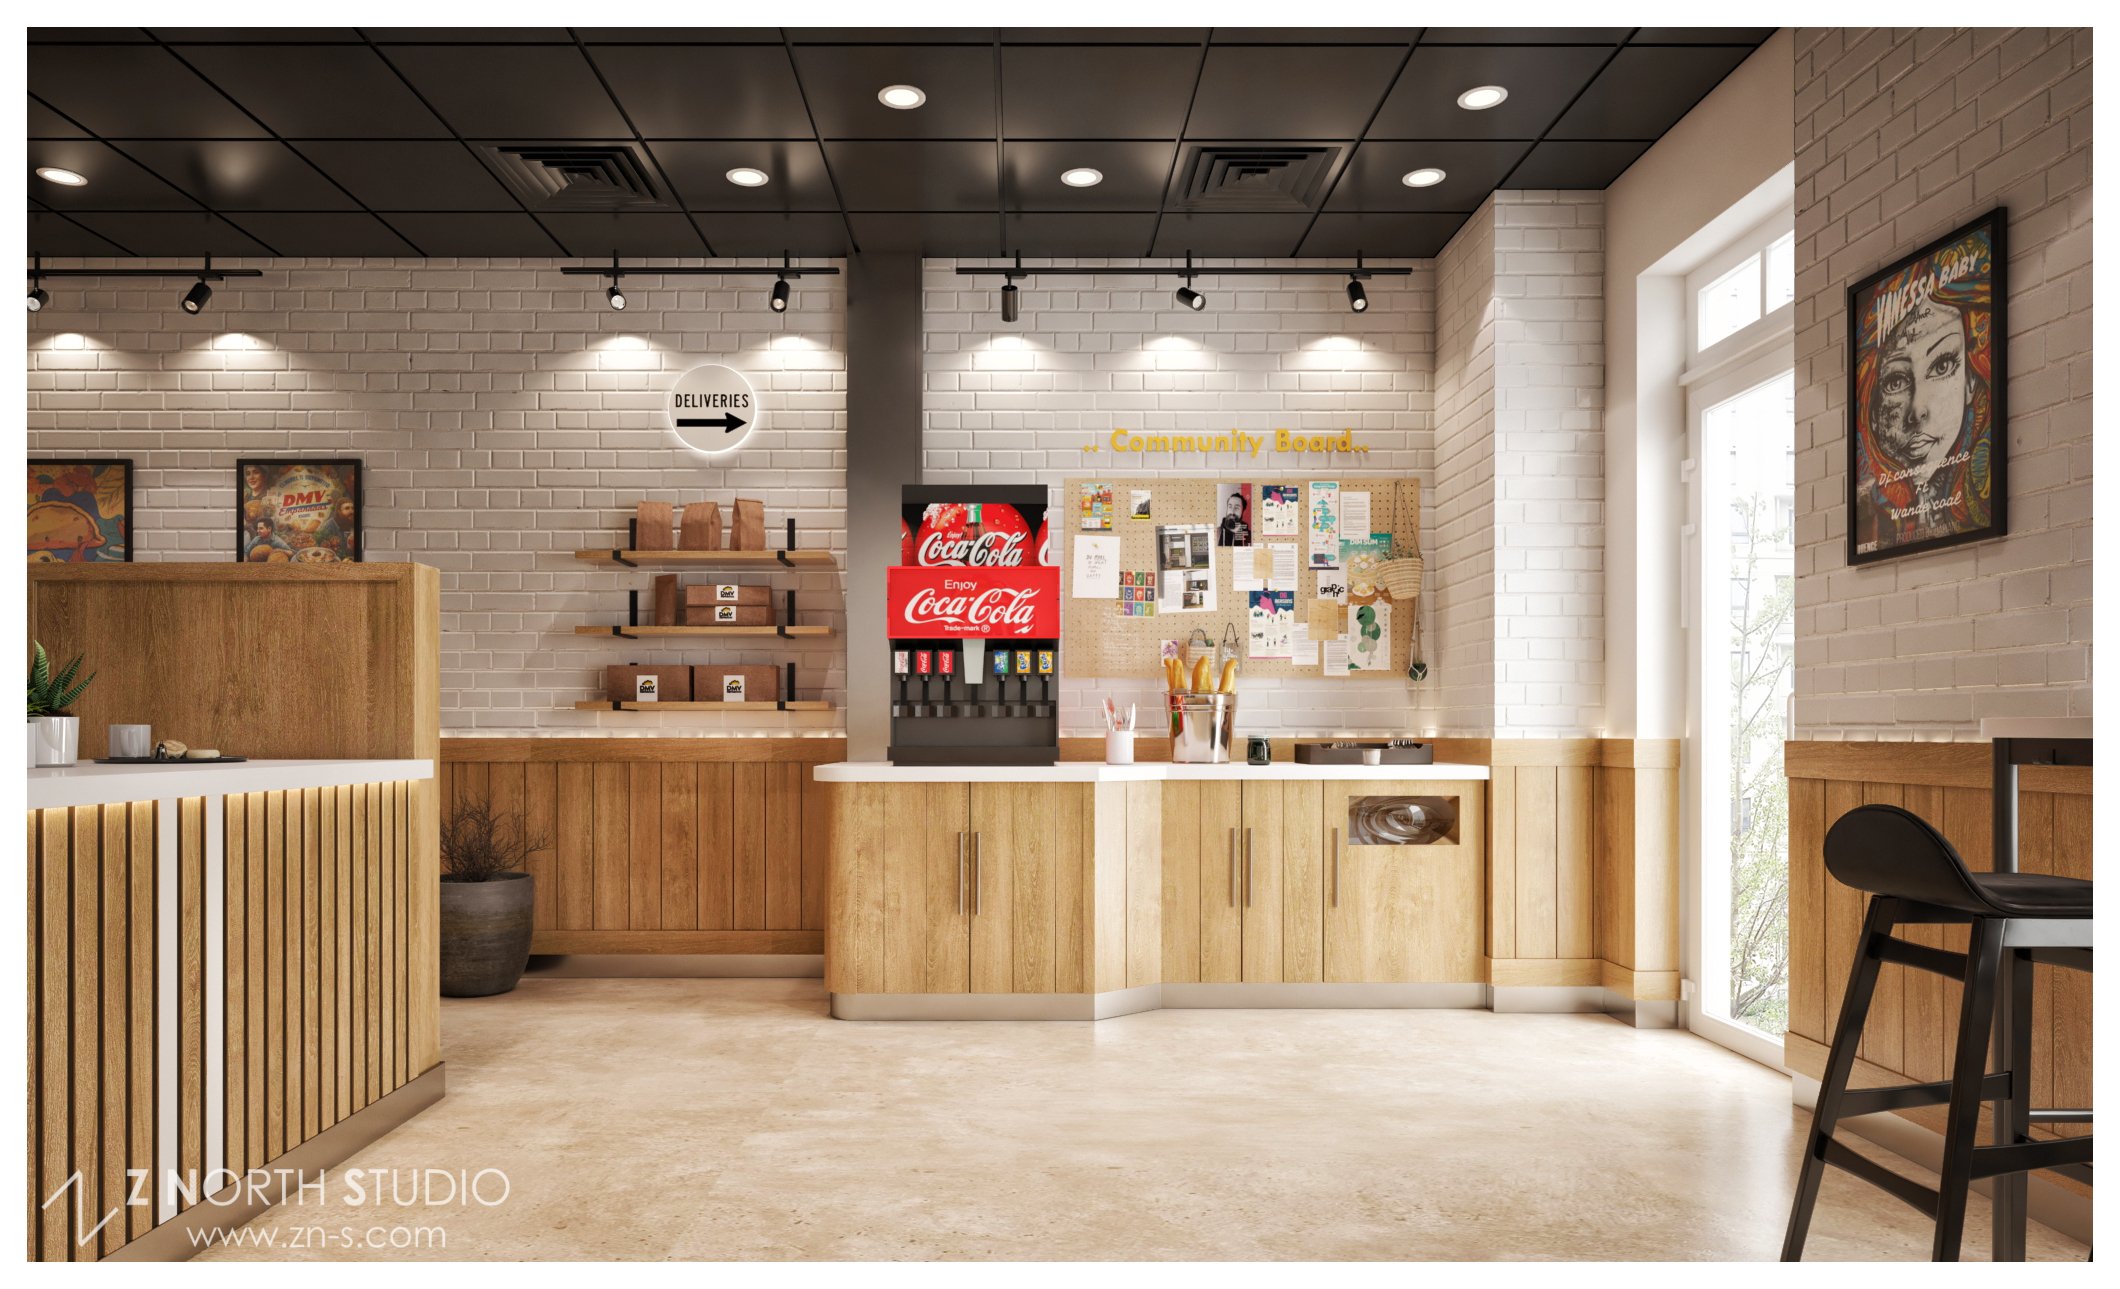 DMV Empanadas - Restaurant Interior Design - Z North Studio (2).jpg